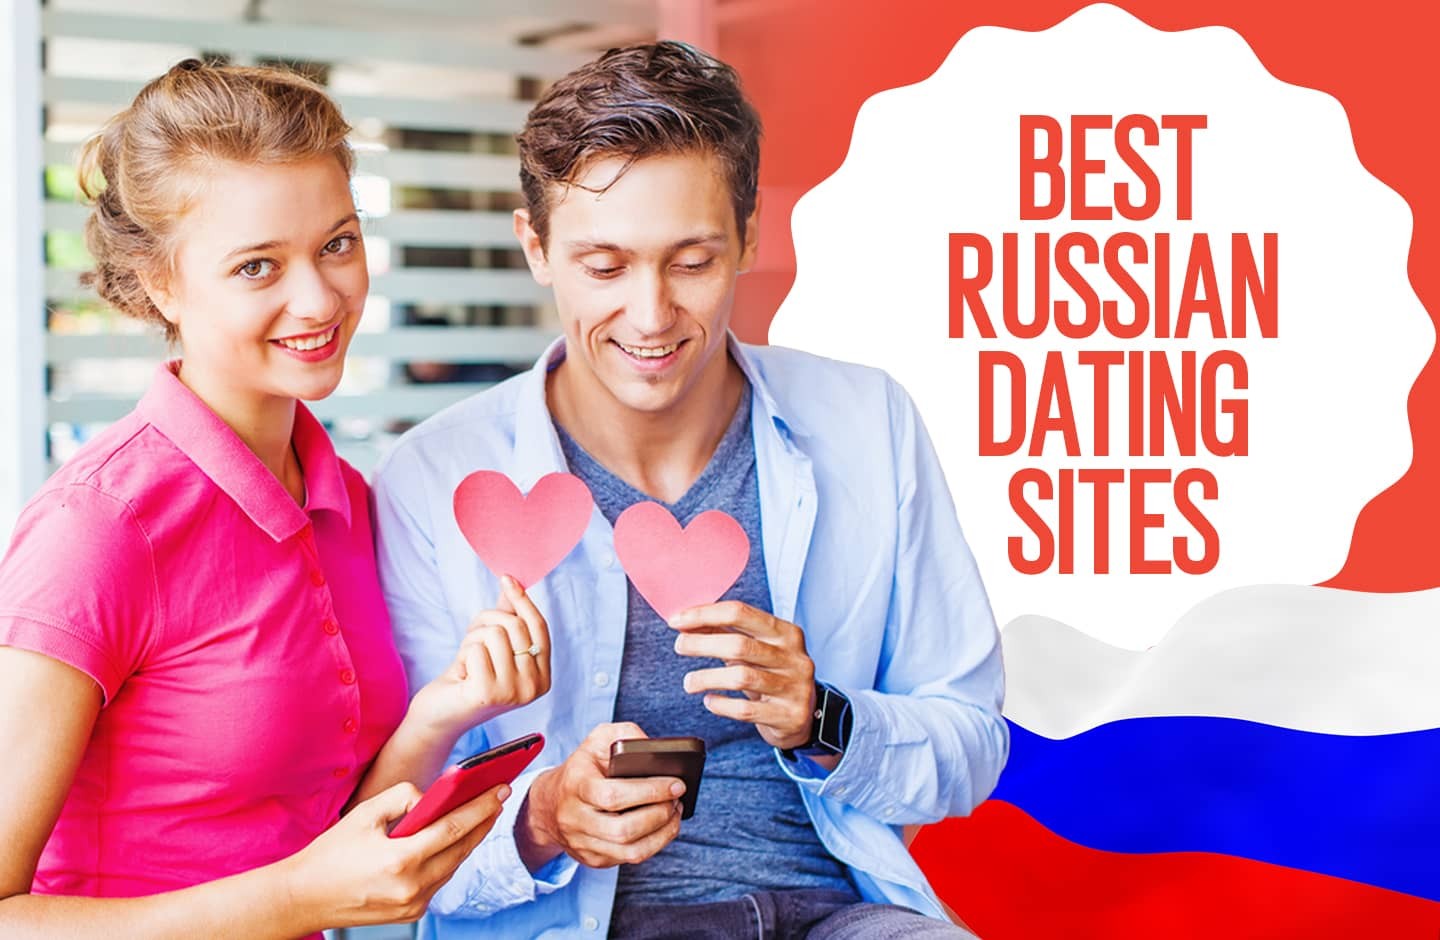 Ukrainian Dating Site - Free Online Dating Services in Ukraine